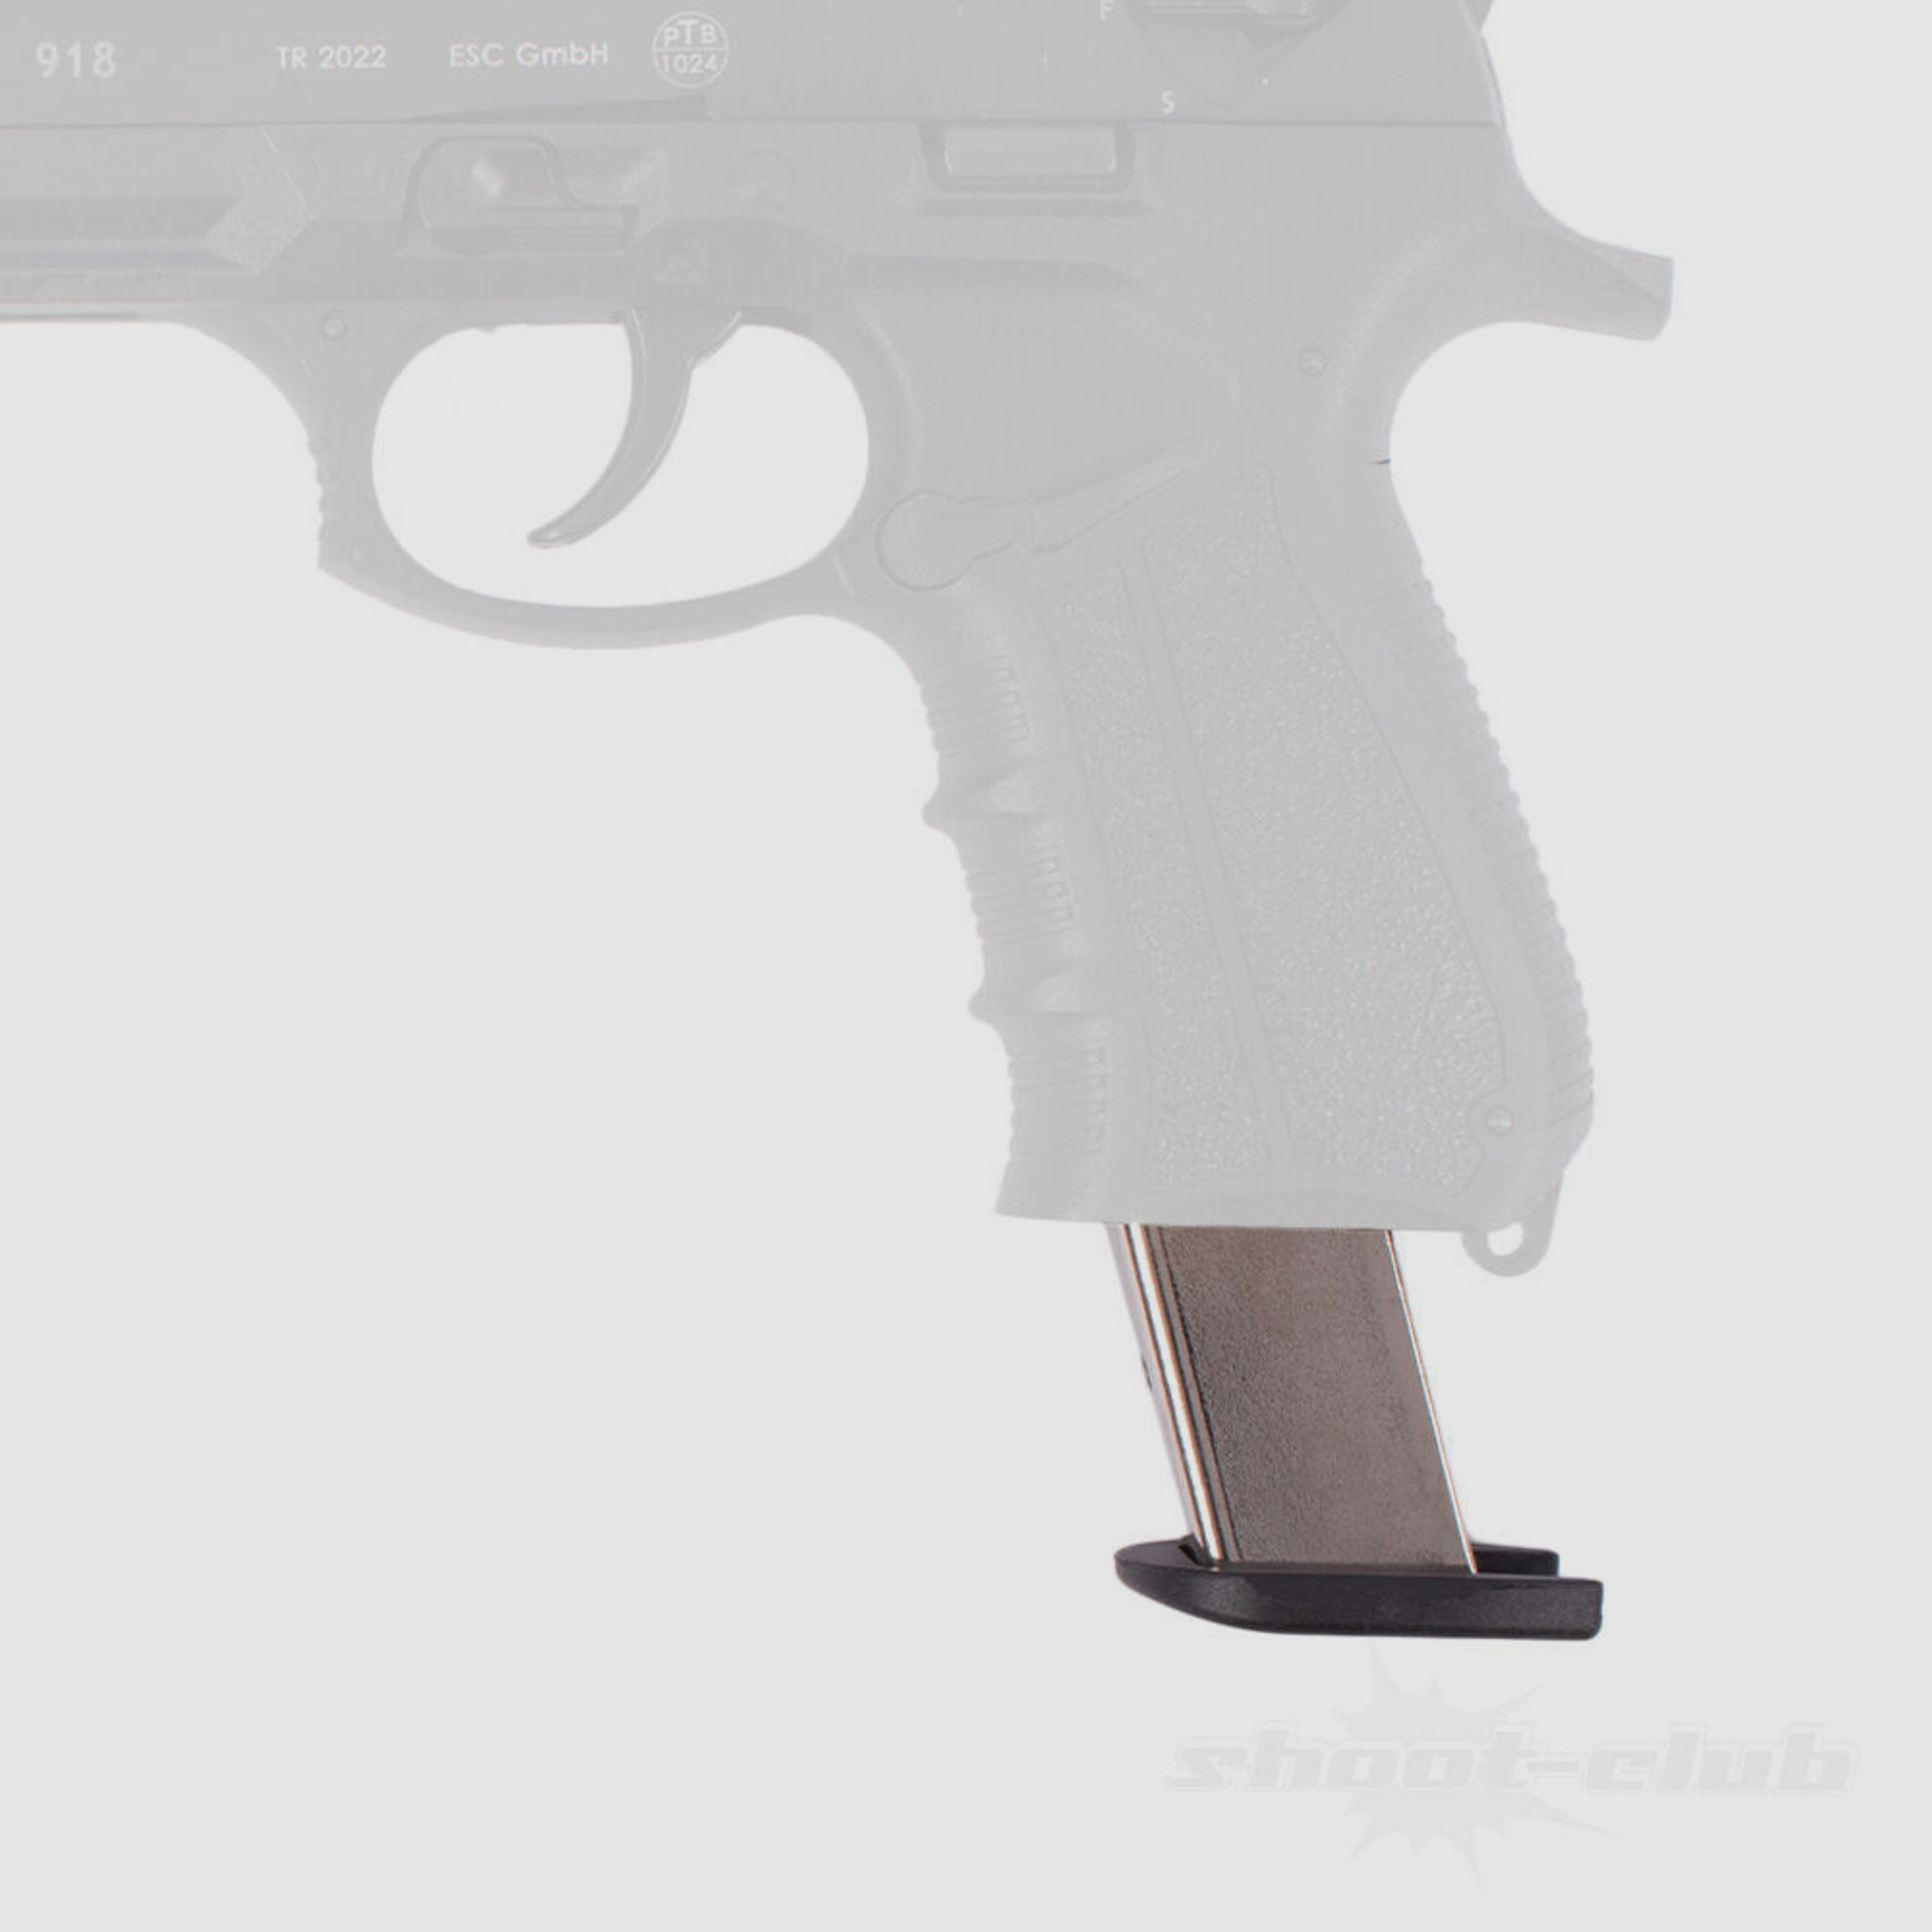 Zoraki 918 Magazin 18 Schuss Chrom Schreckschuss-Pistole - 9mm P.A.K.